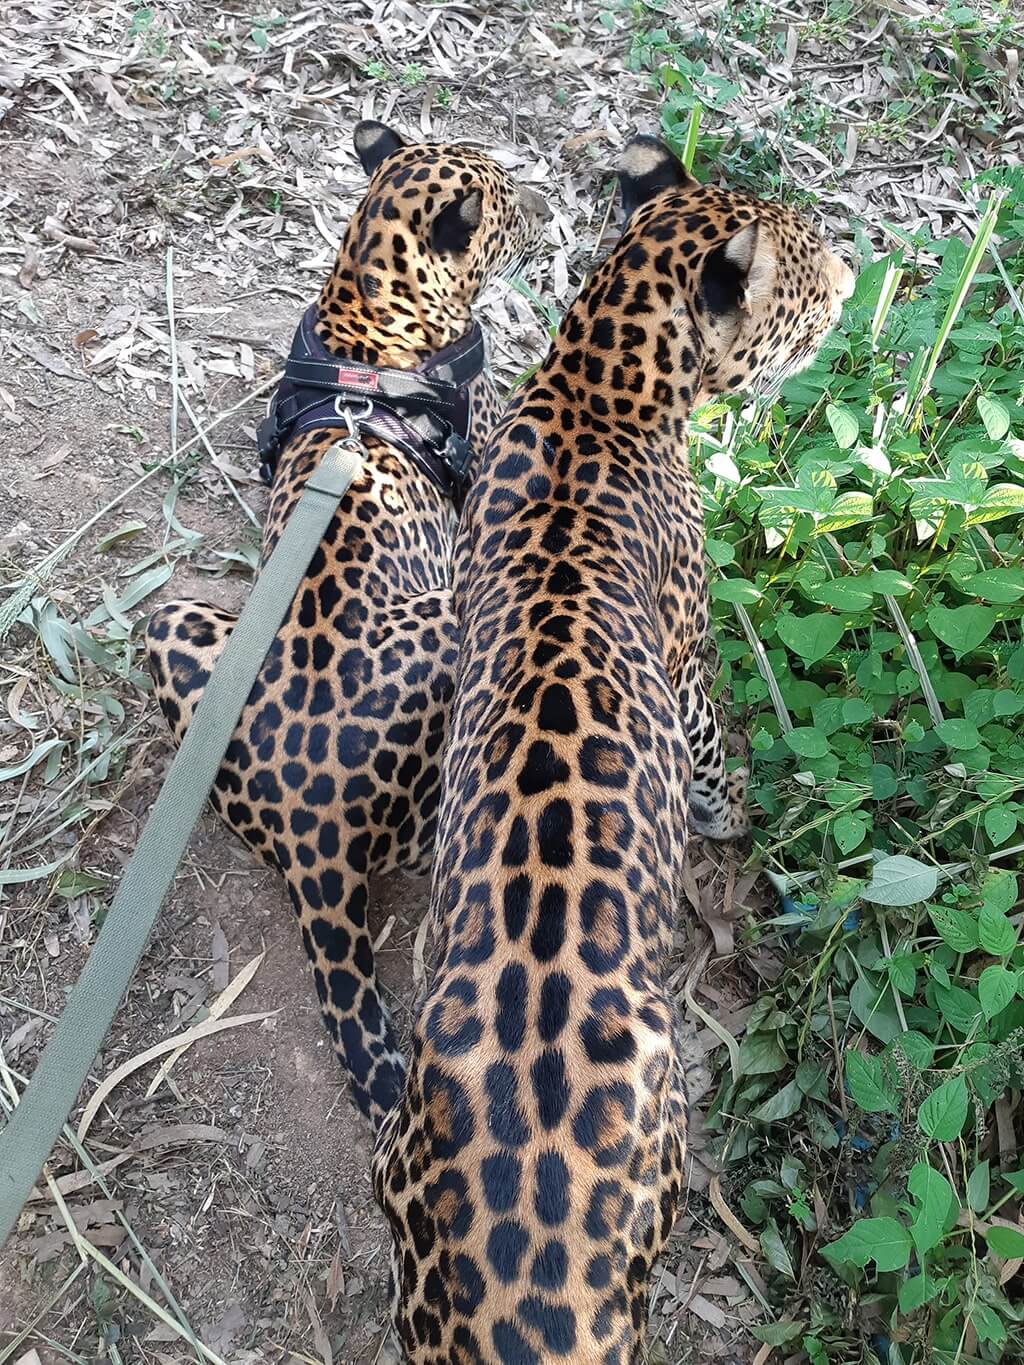 Wandeegroup: Mario Kleff's leopards in Pattaya 32